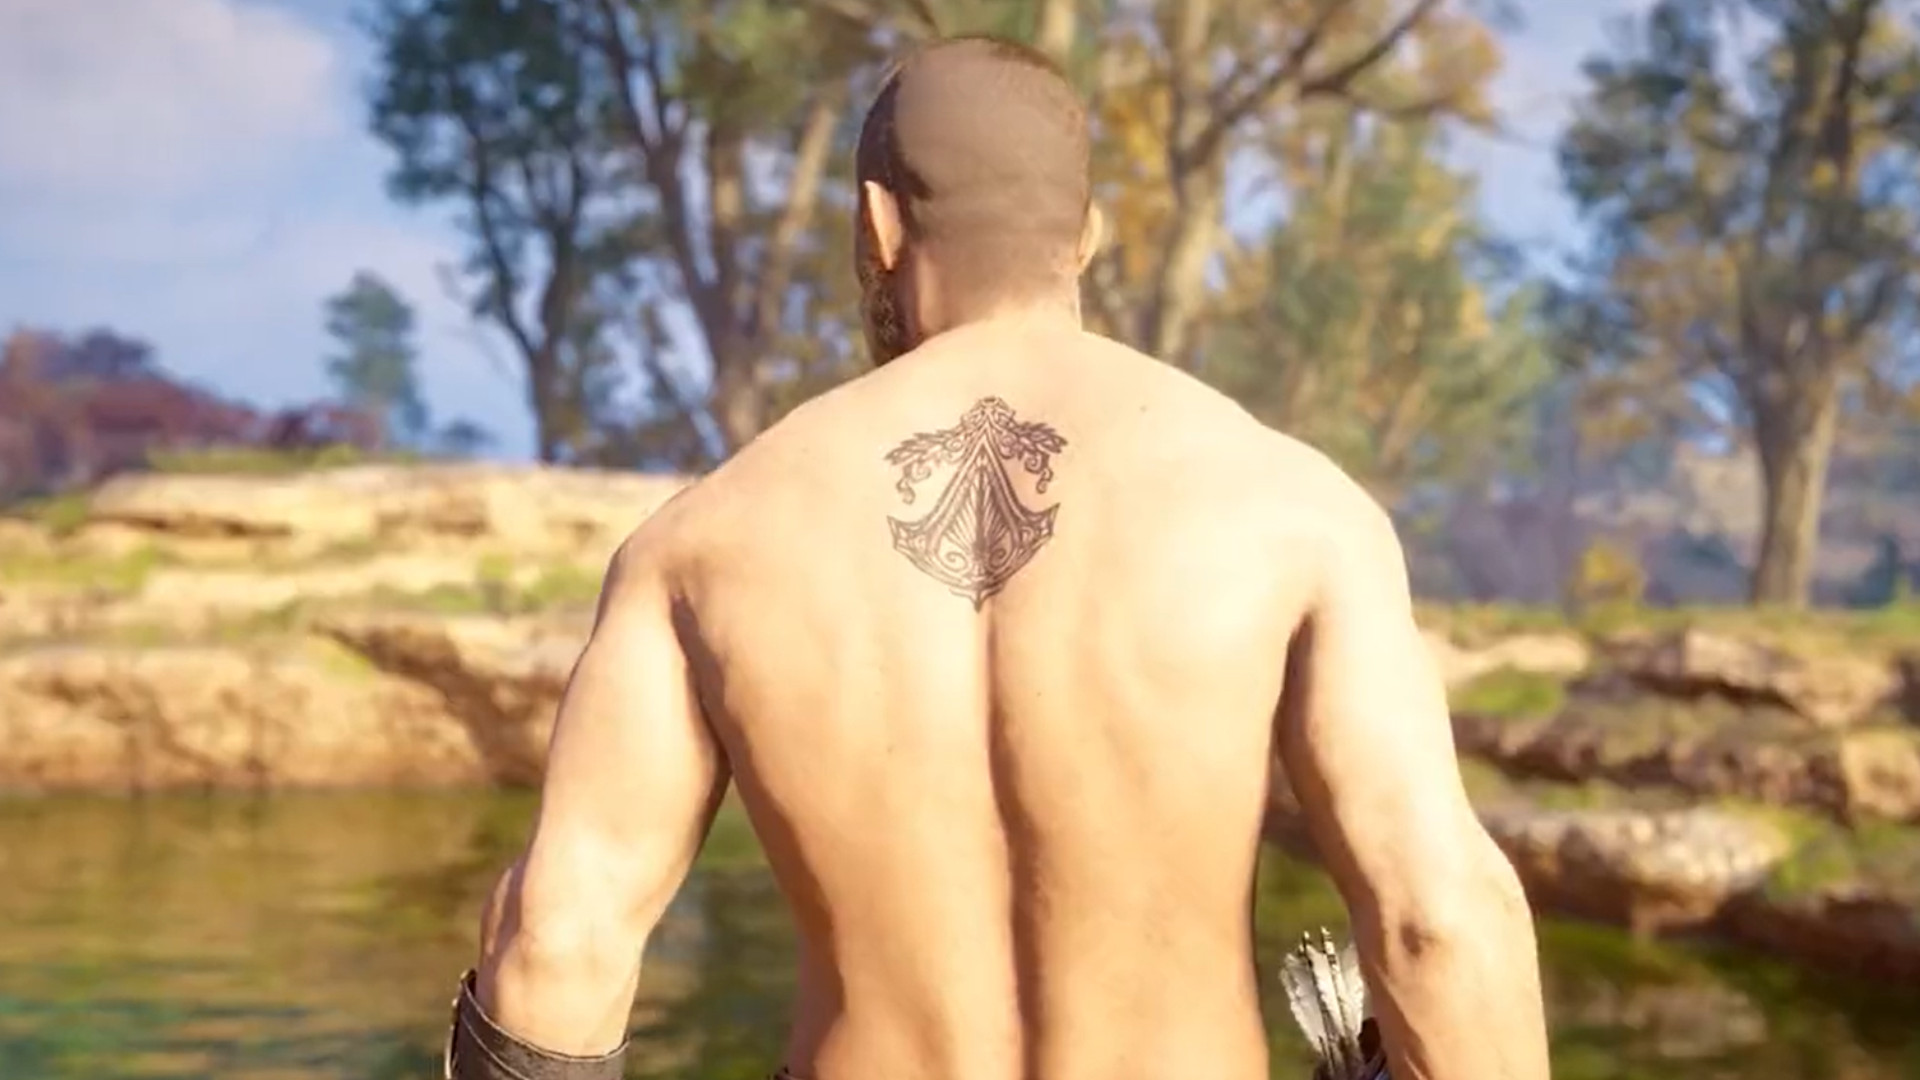 101 Amazing Assassins Creed Tattoo Designs You Need To See  Assassins  creed tattoo Gaming tattoo Tattoos